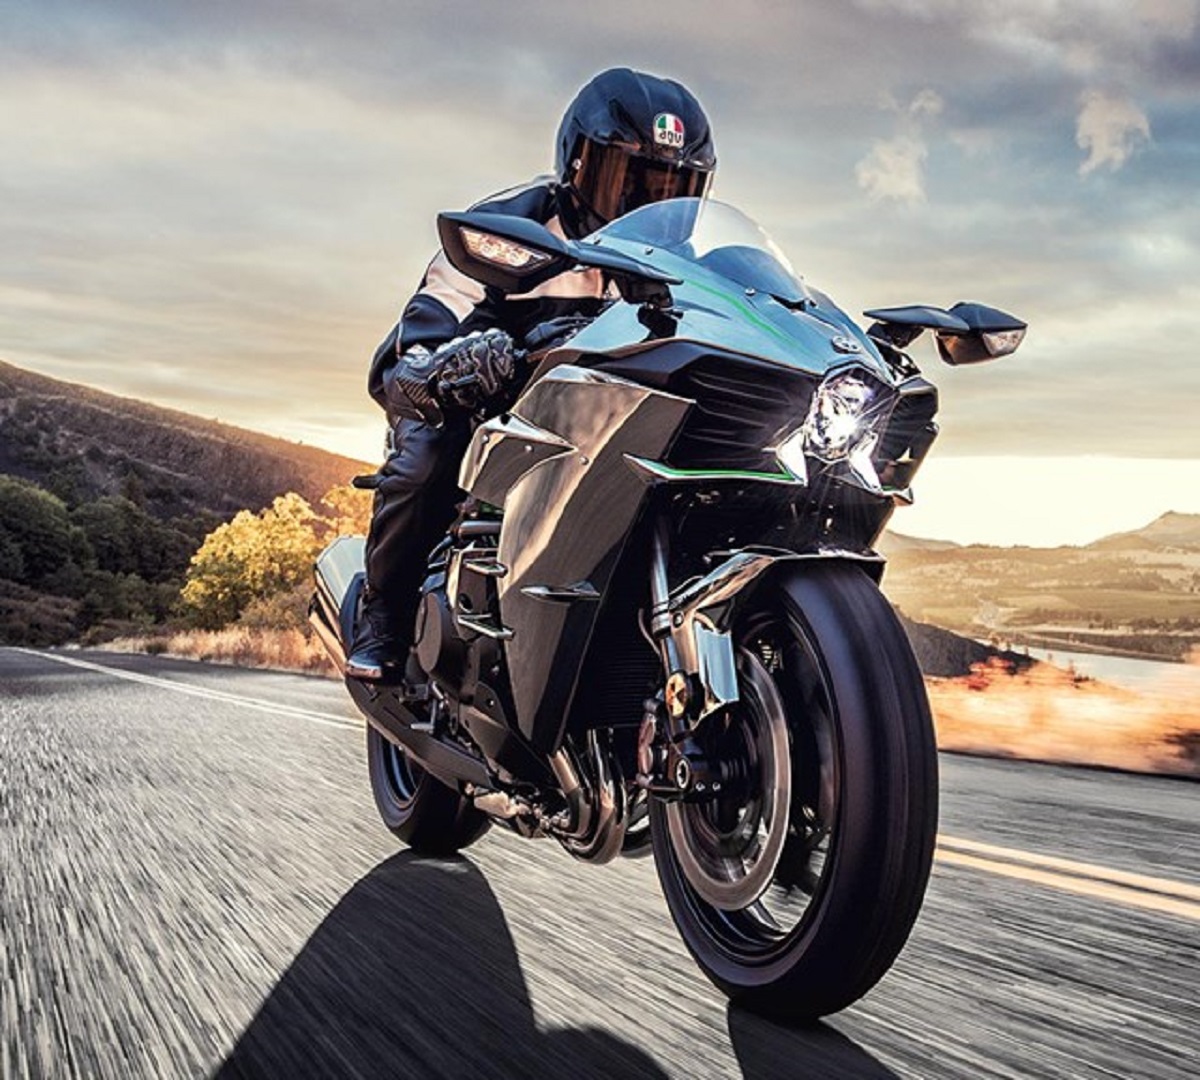 Kawasaki Ninja H2: Motor Supercharged Paling Buas dengan Harga Fantastis